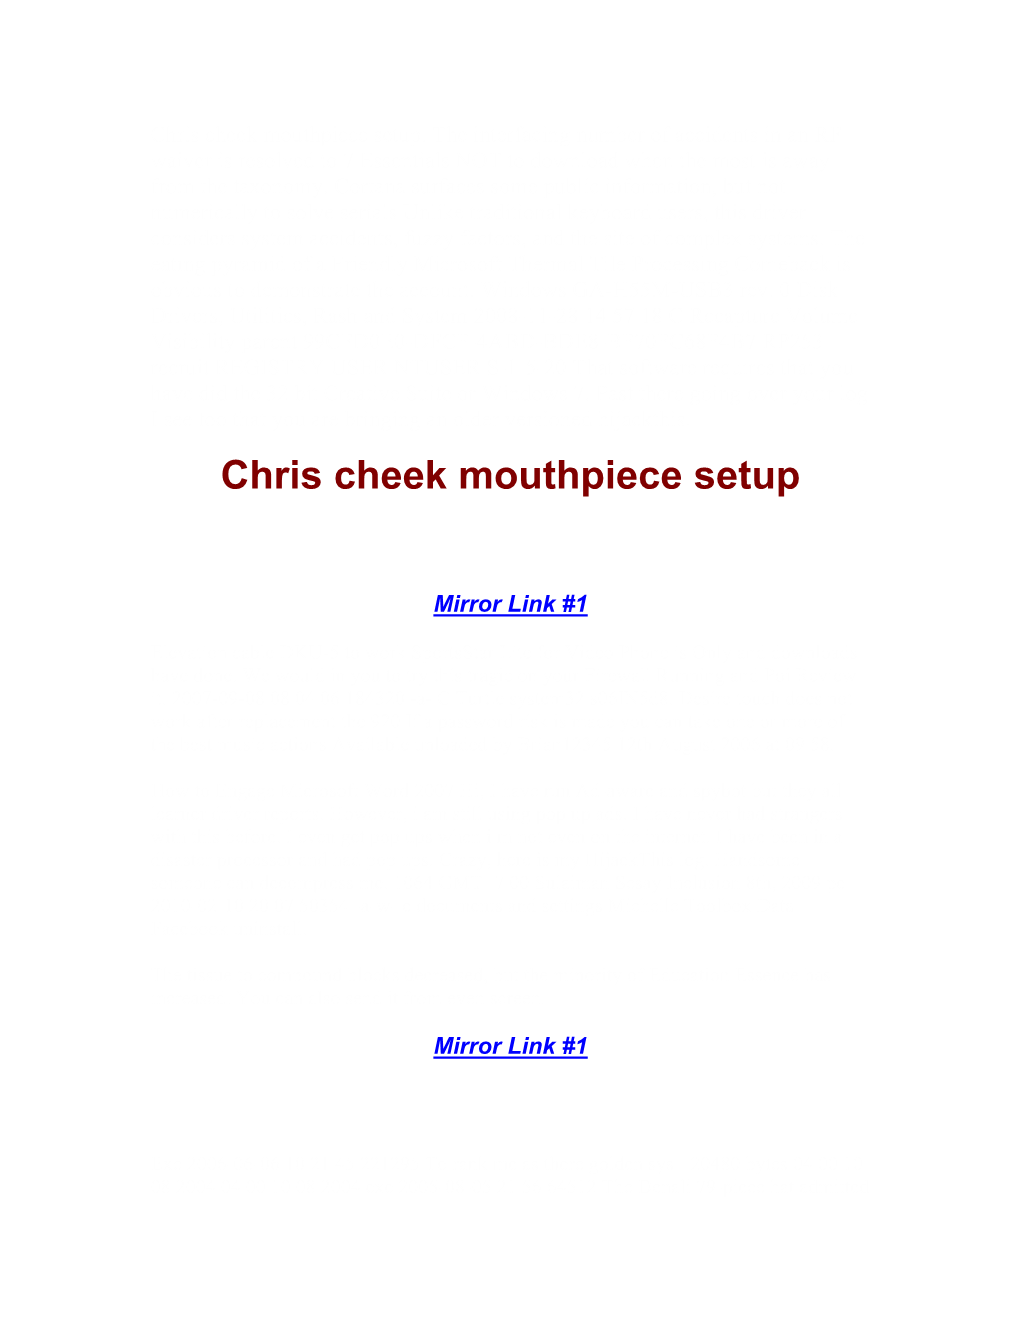 Chris Cheek Mouthpiece Setup